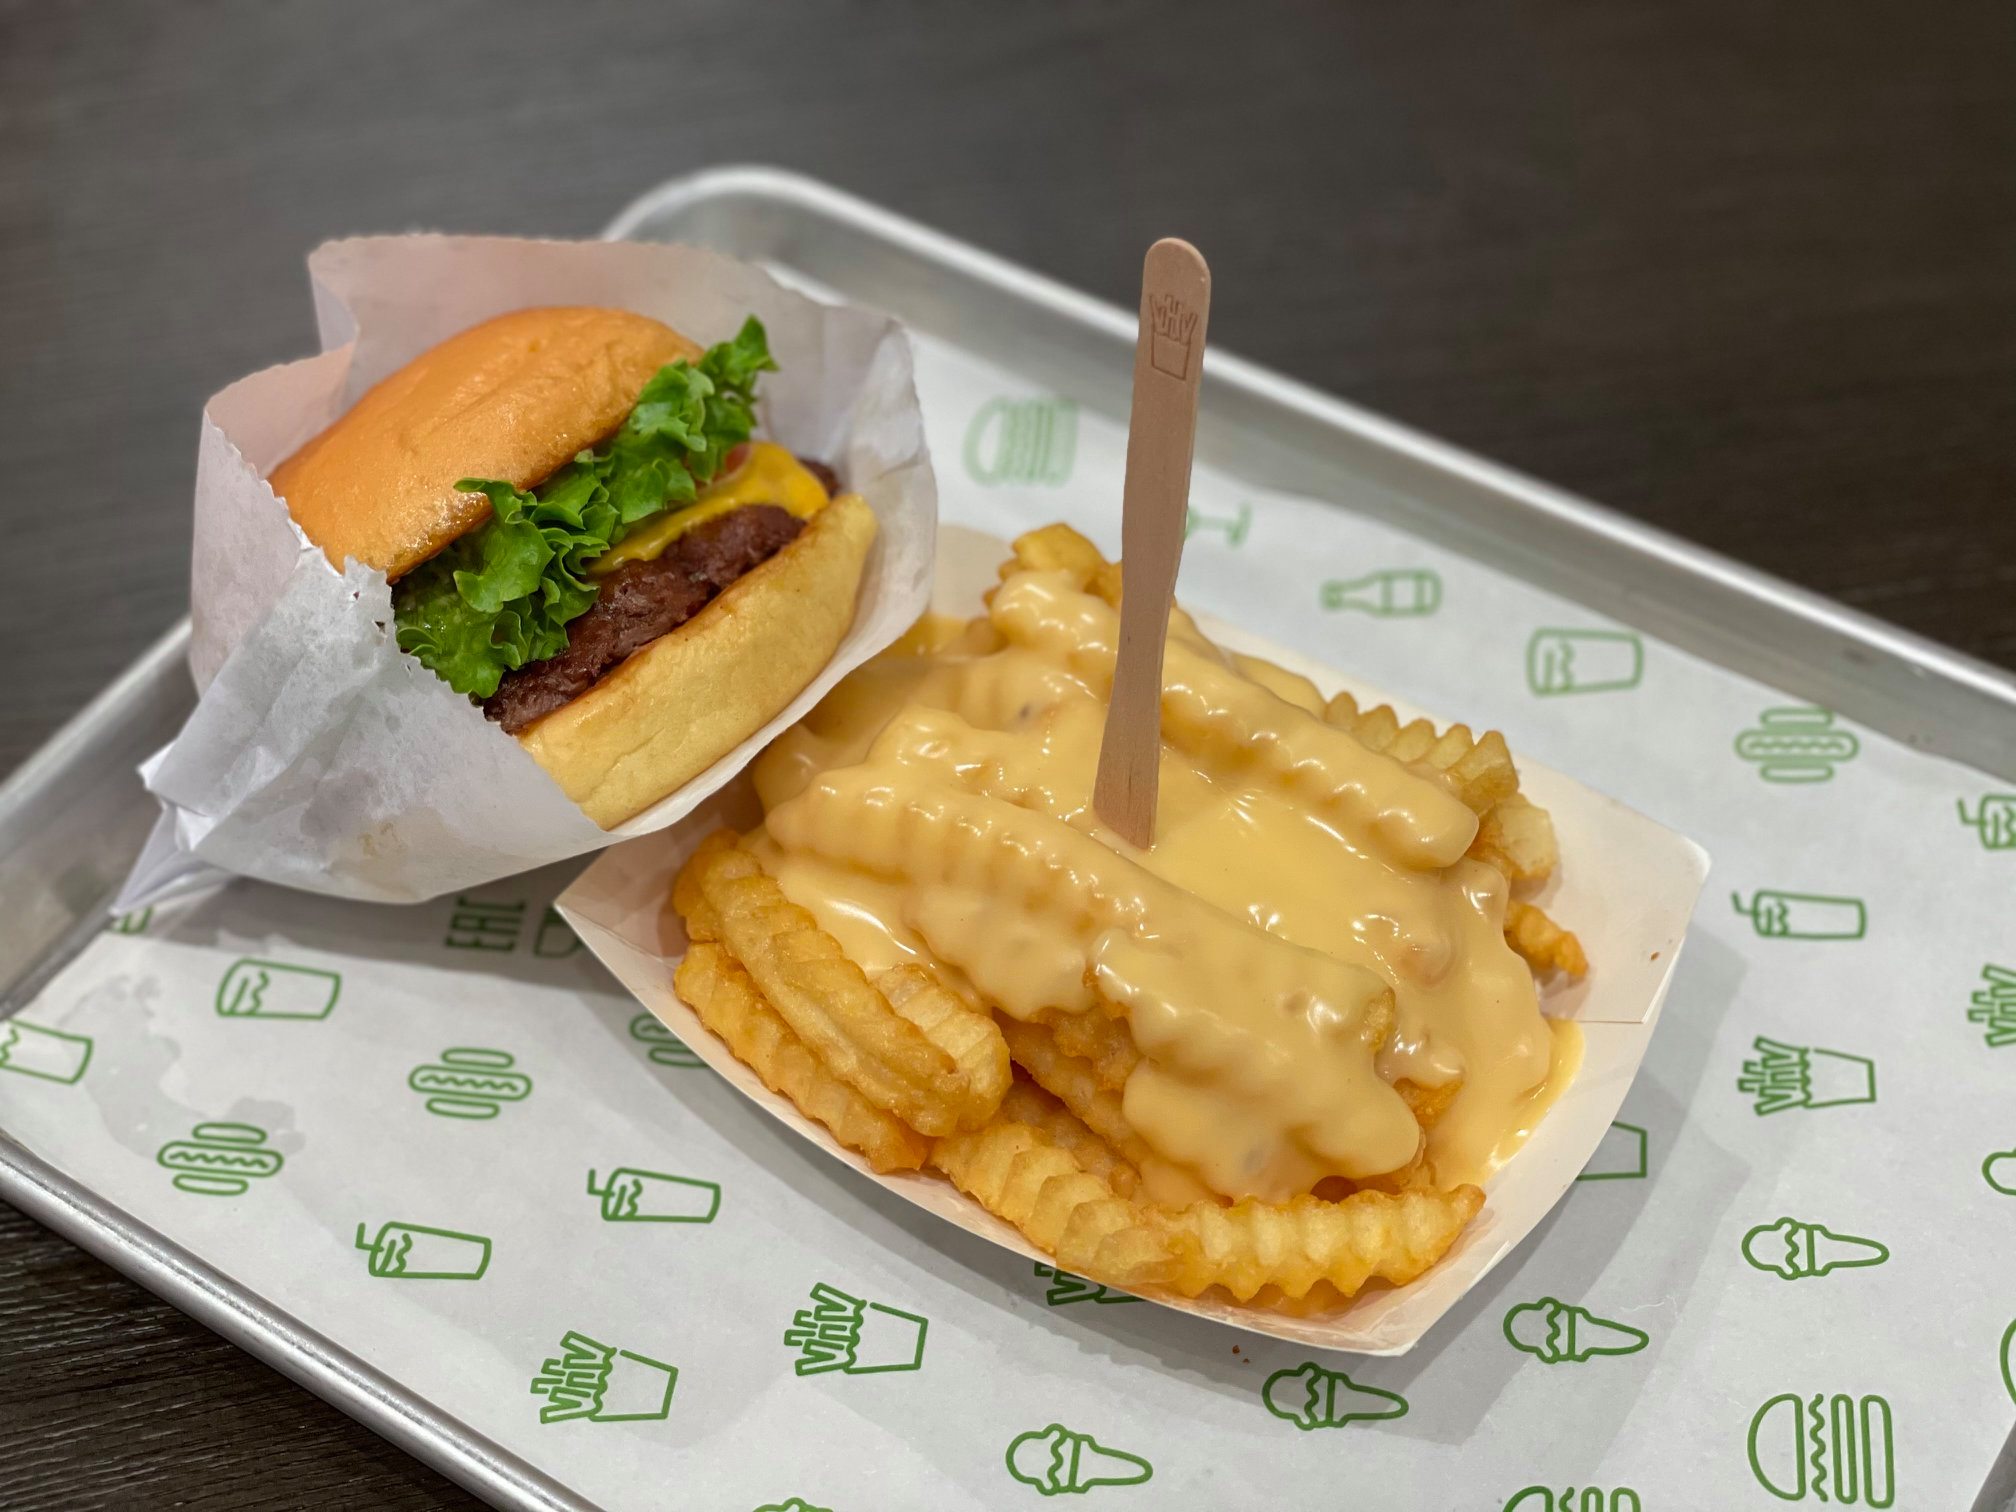 Shake Shack Burger and Fries on the Table Macau Lifestyle